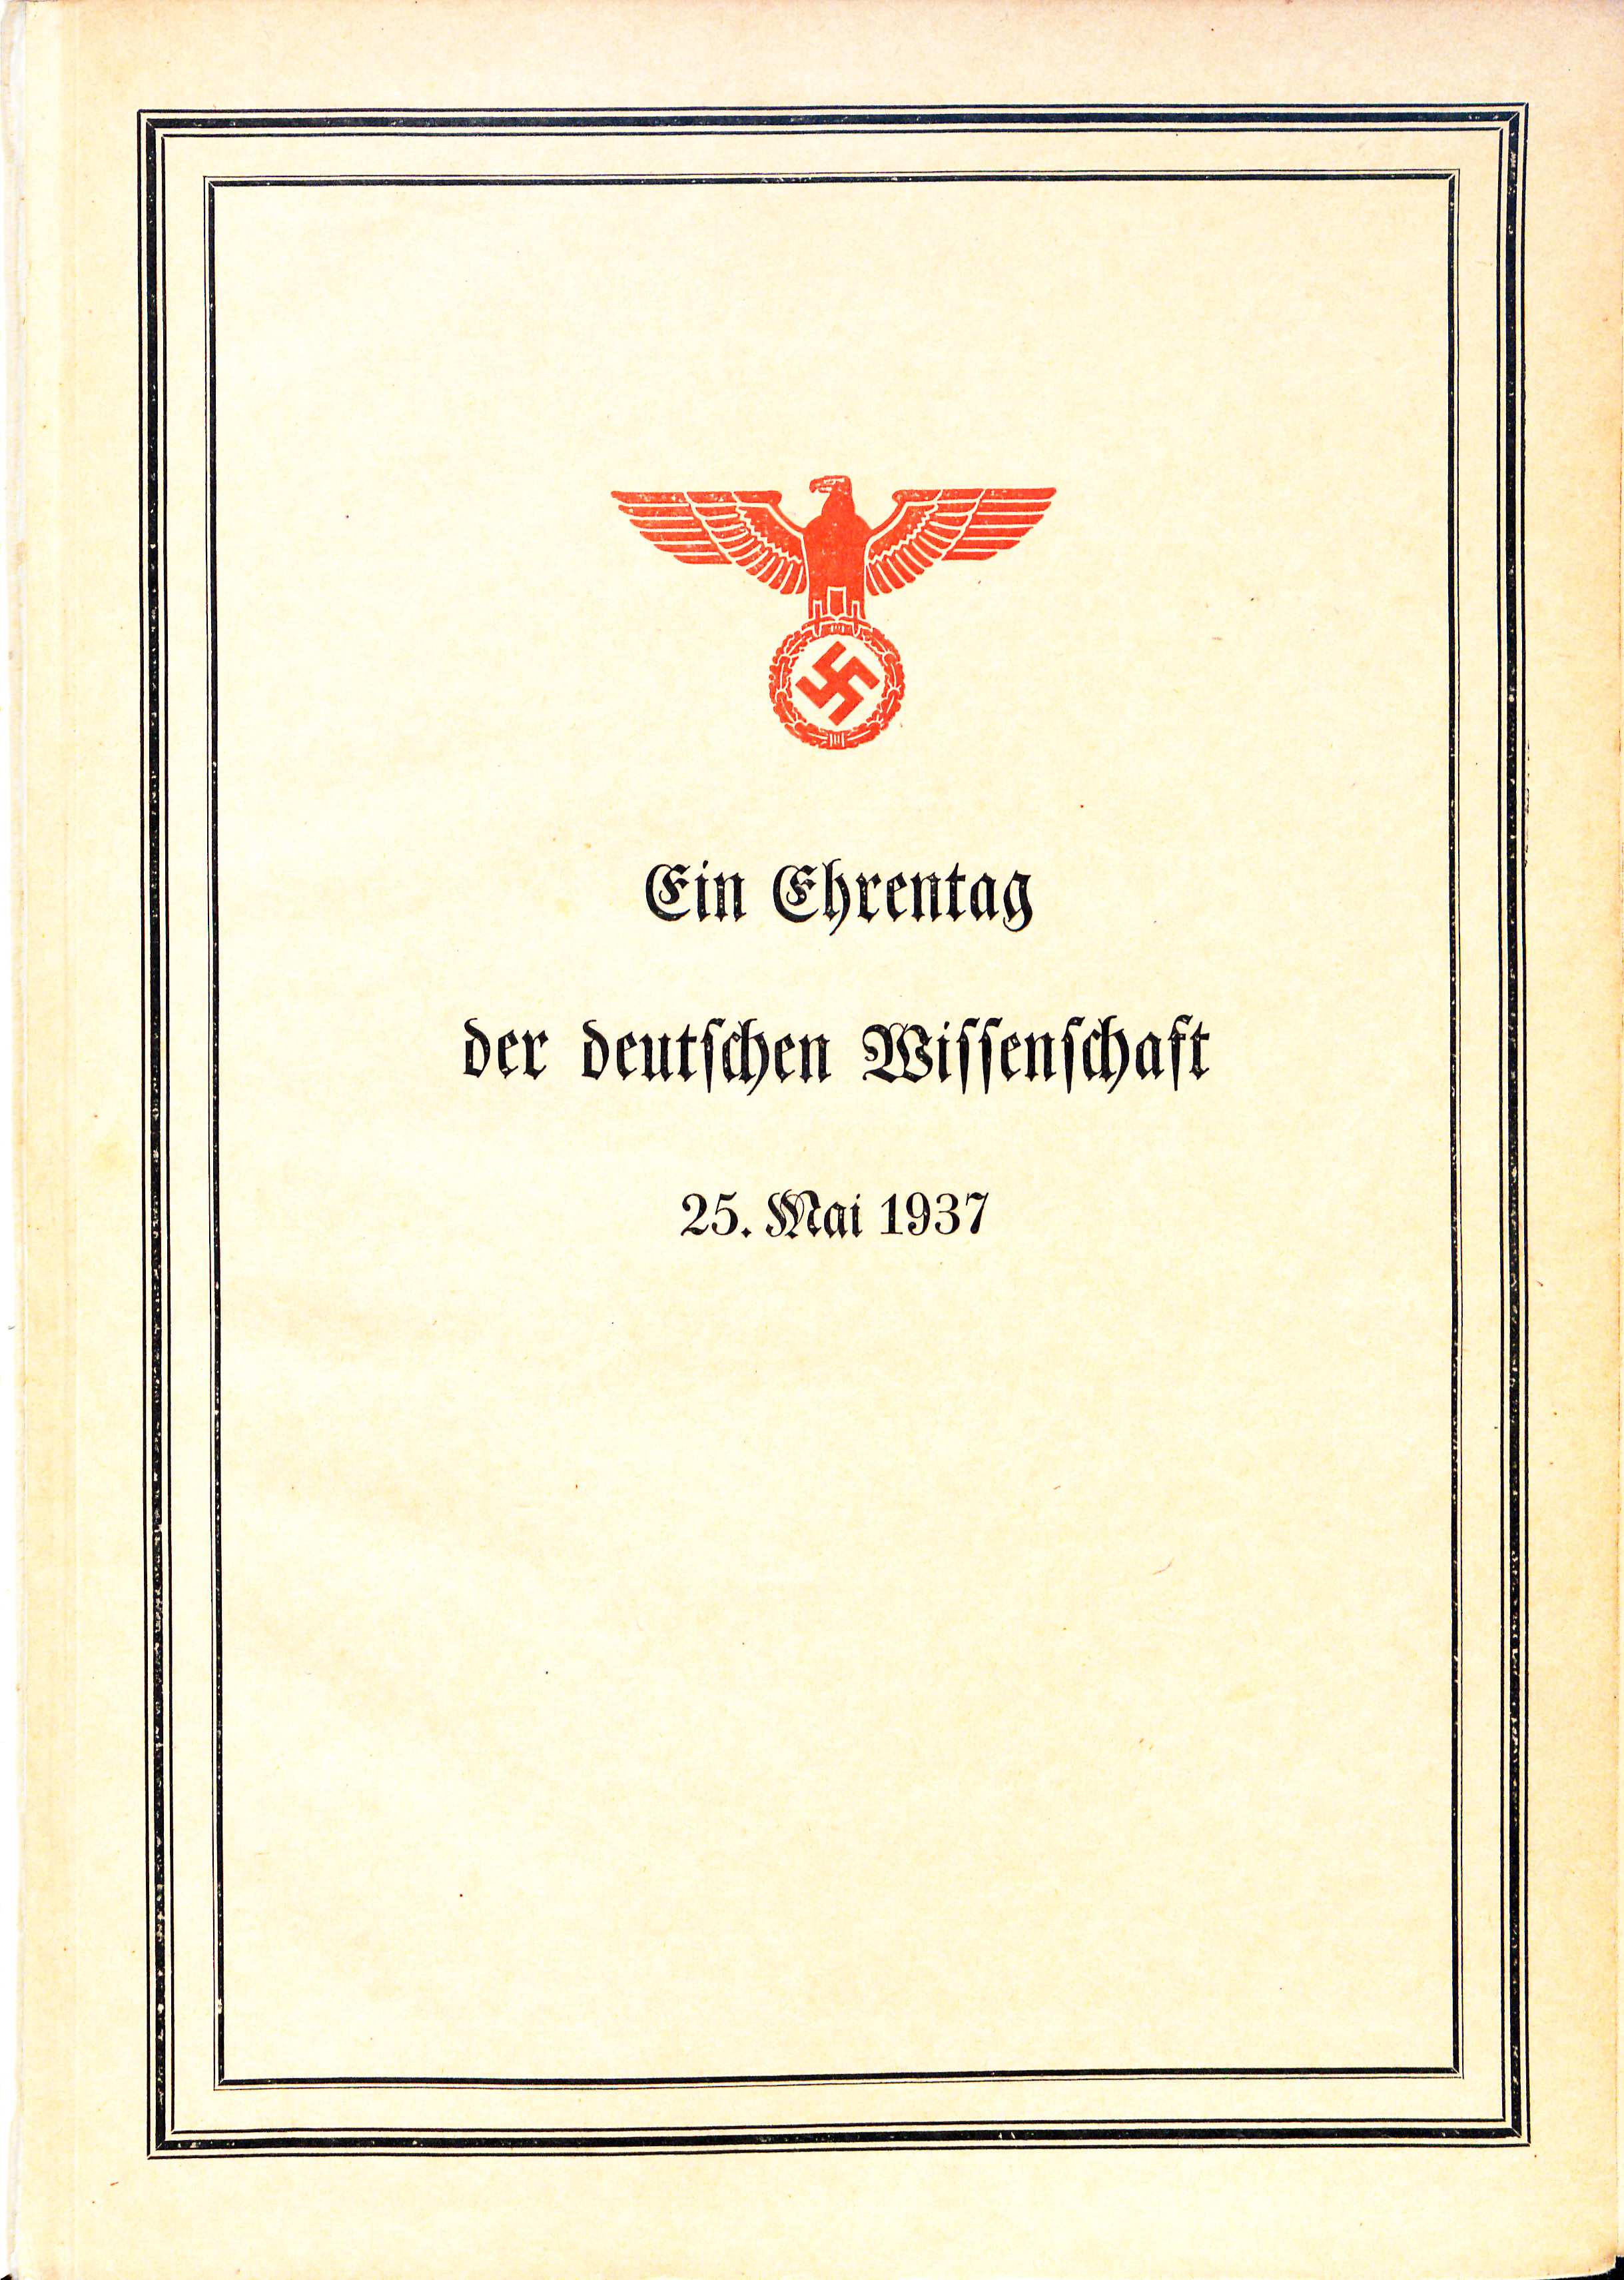 Deckblatt der Festschrift zur Gründung des Reichsforschungsrates